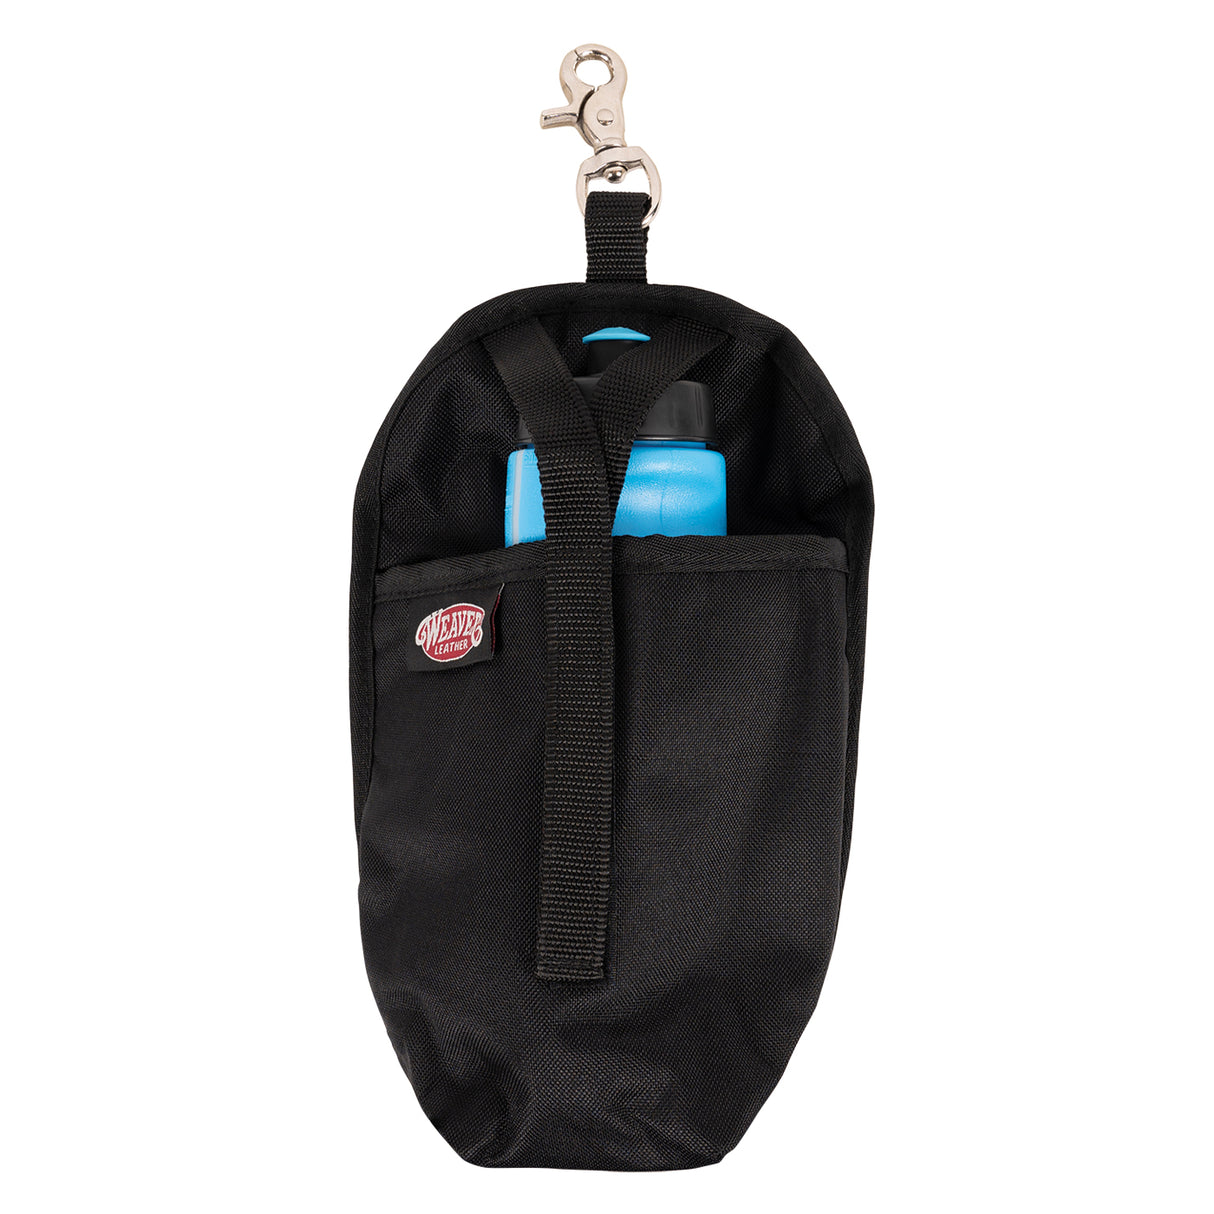 Leather Utility Holster - Holster Vest Travel Bag